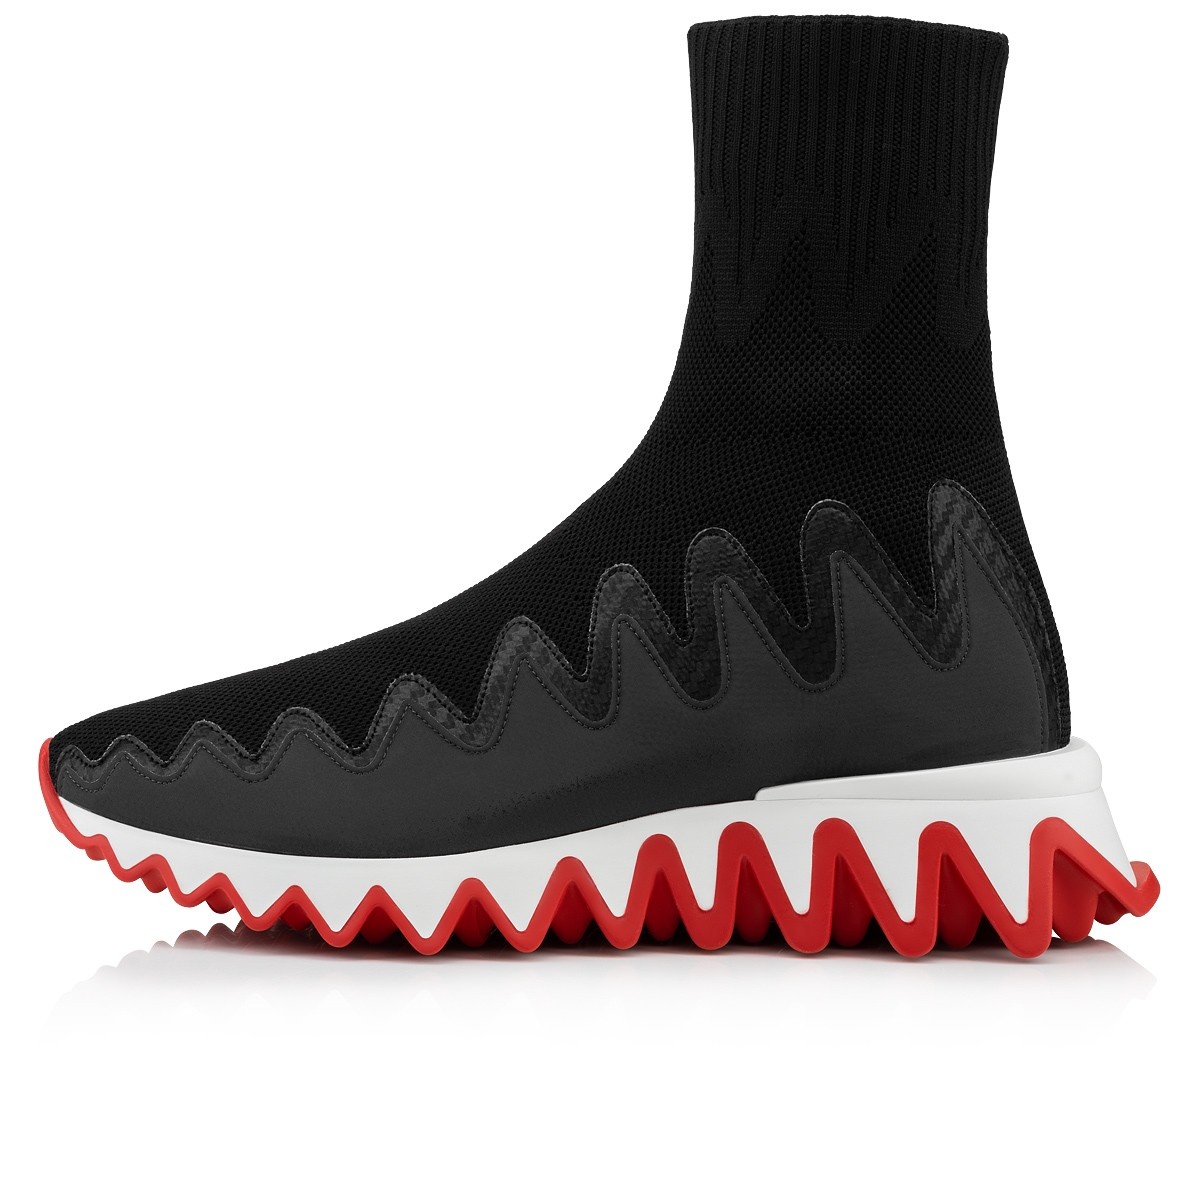 Sharky Sock Black - 1